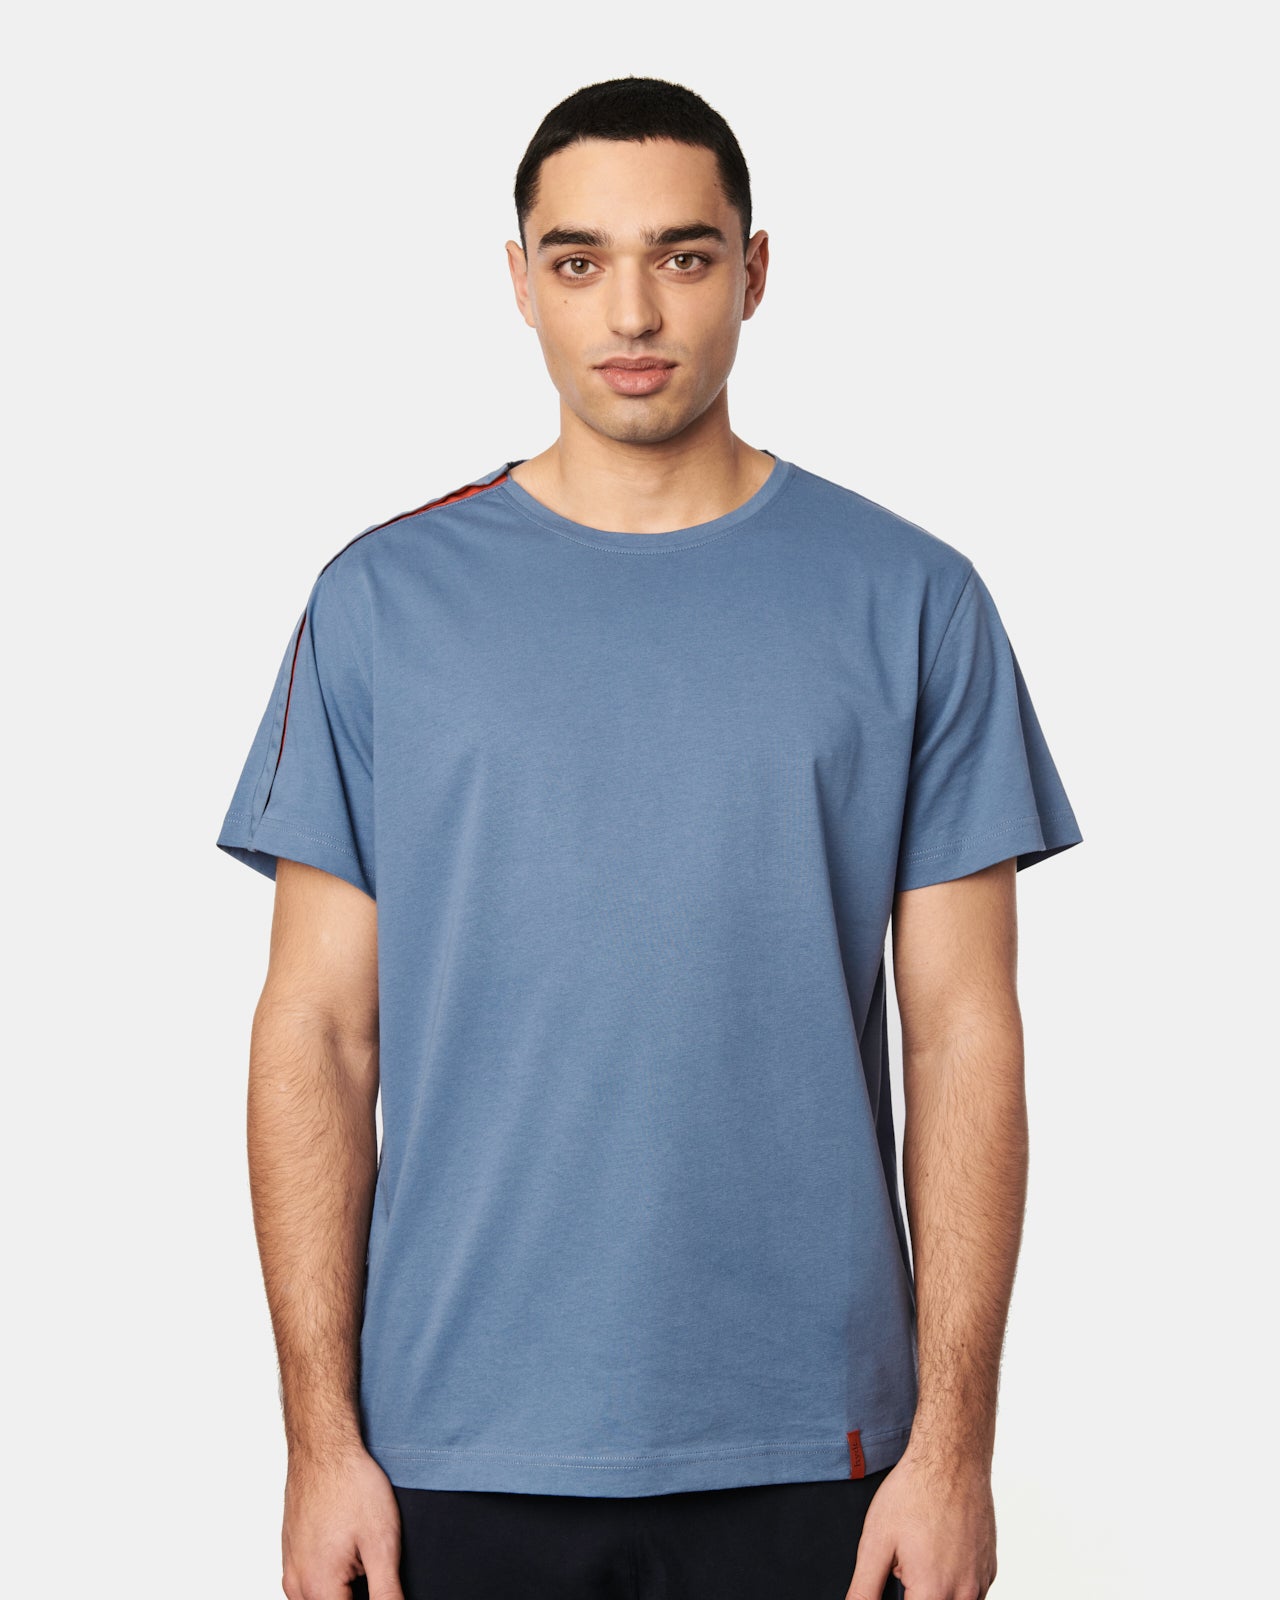  Das Herren T-Shirt Harri in der Farbe Finian Blue.